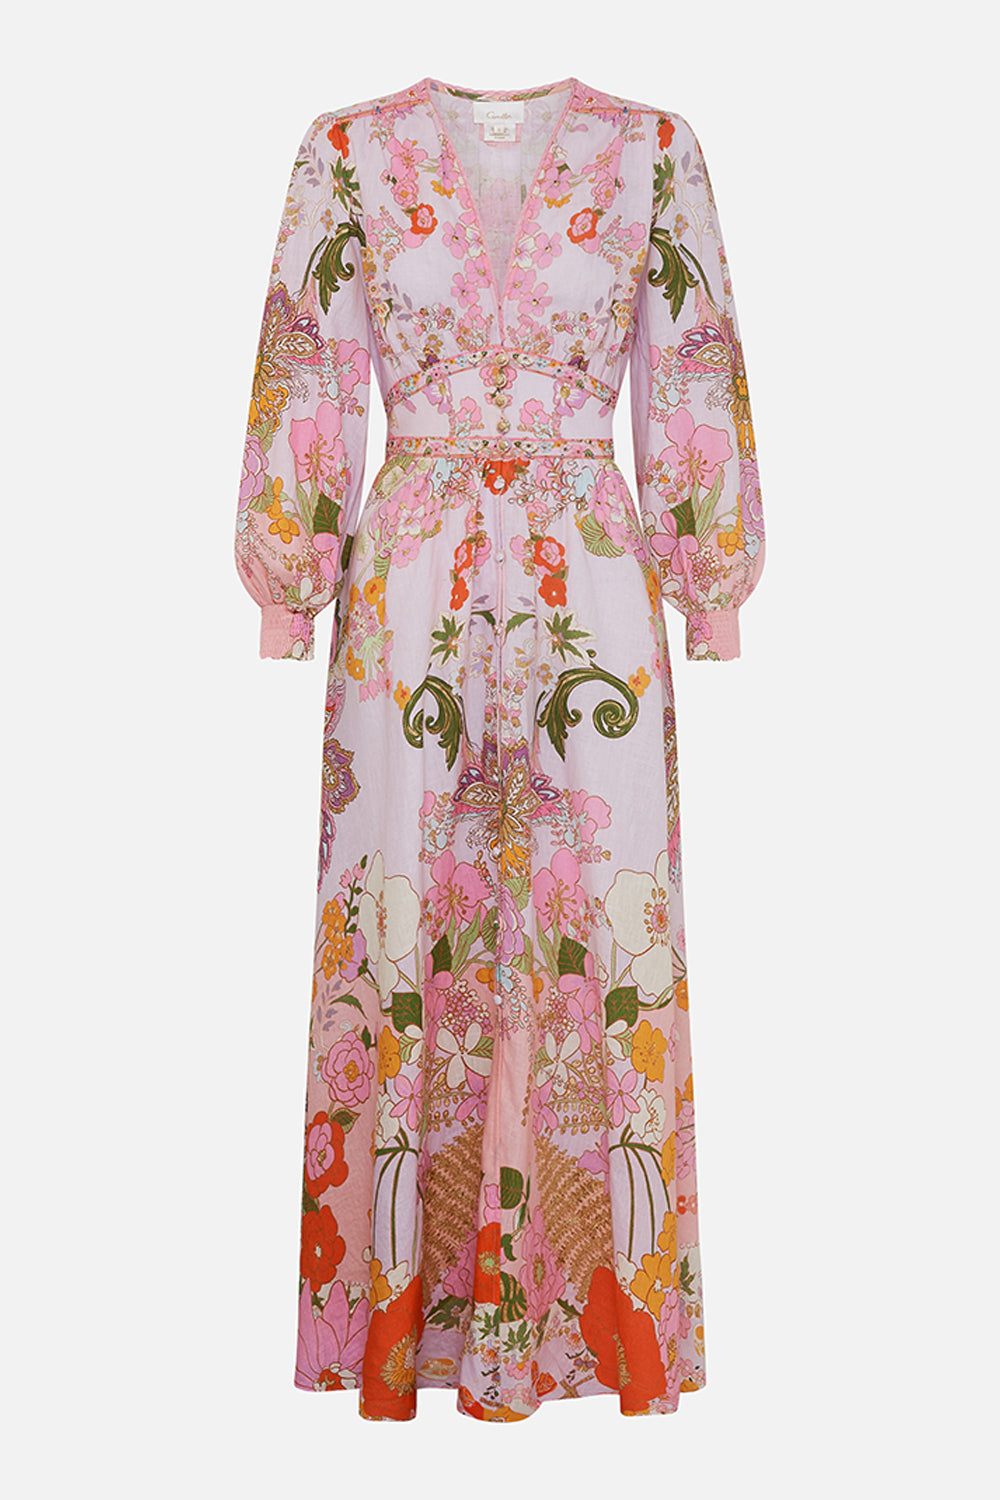 CAMILLA silk floral print dress in Clever Clogs print